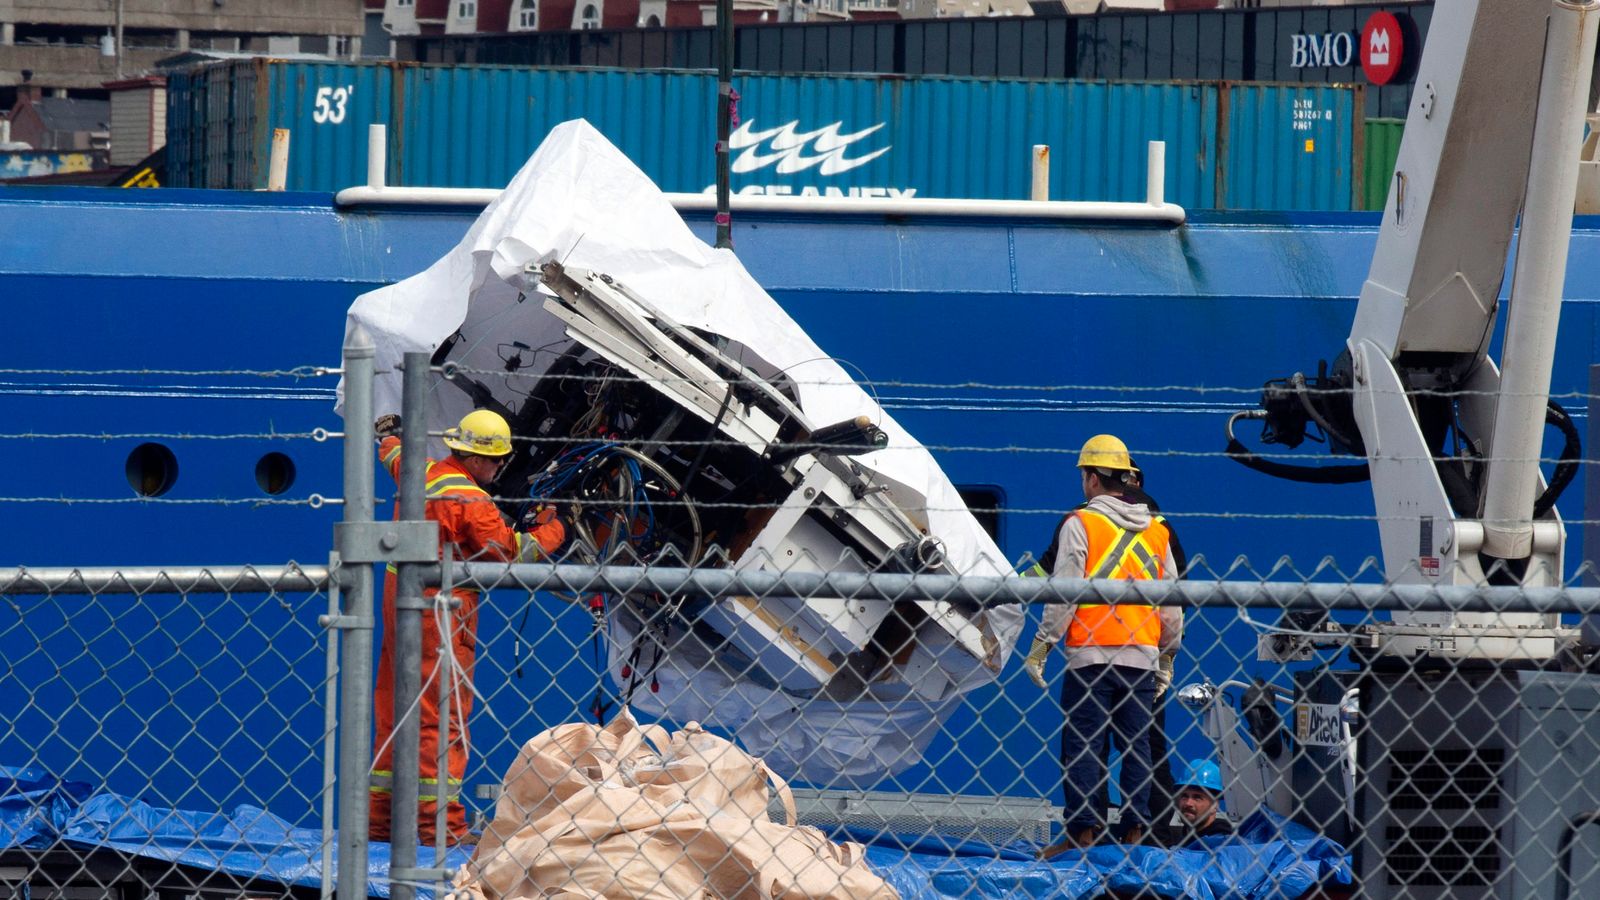 Newfoundland Titan submersible debris brought ashore after deadly